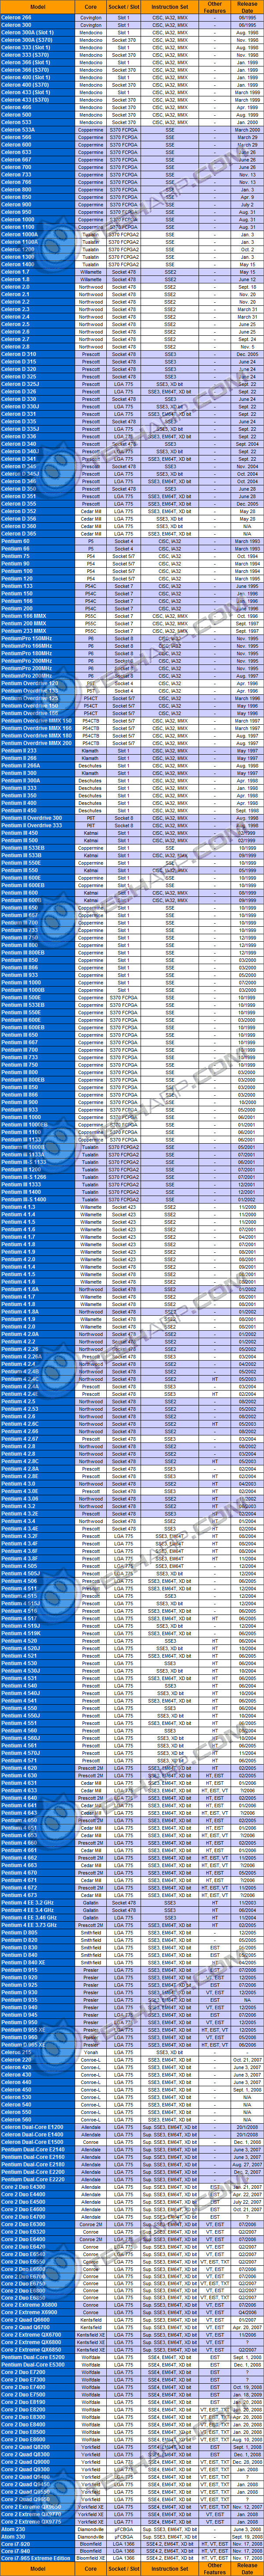 CPU Details & Features (Intel)